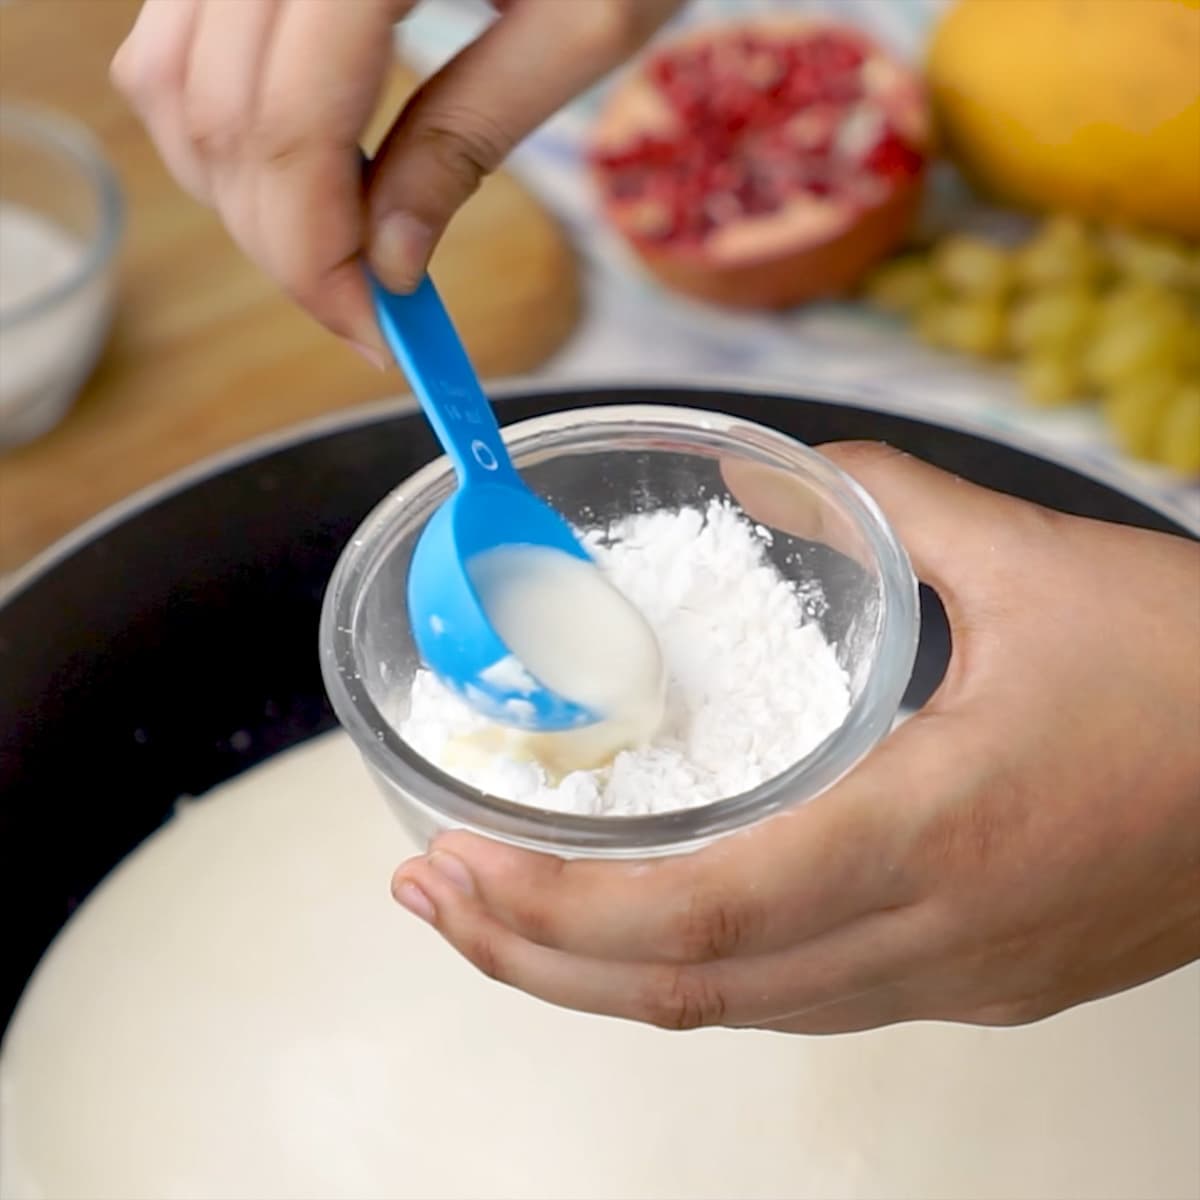 Add milk to the custard powder